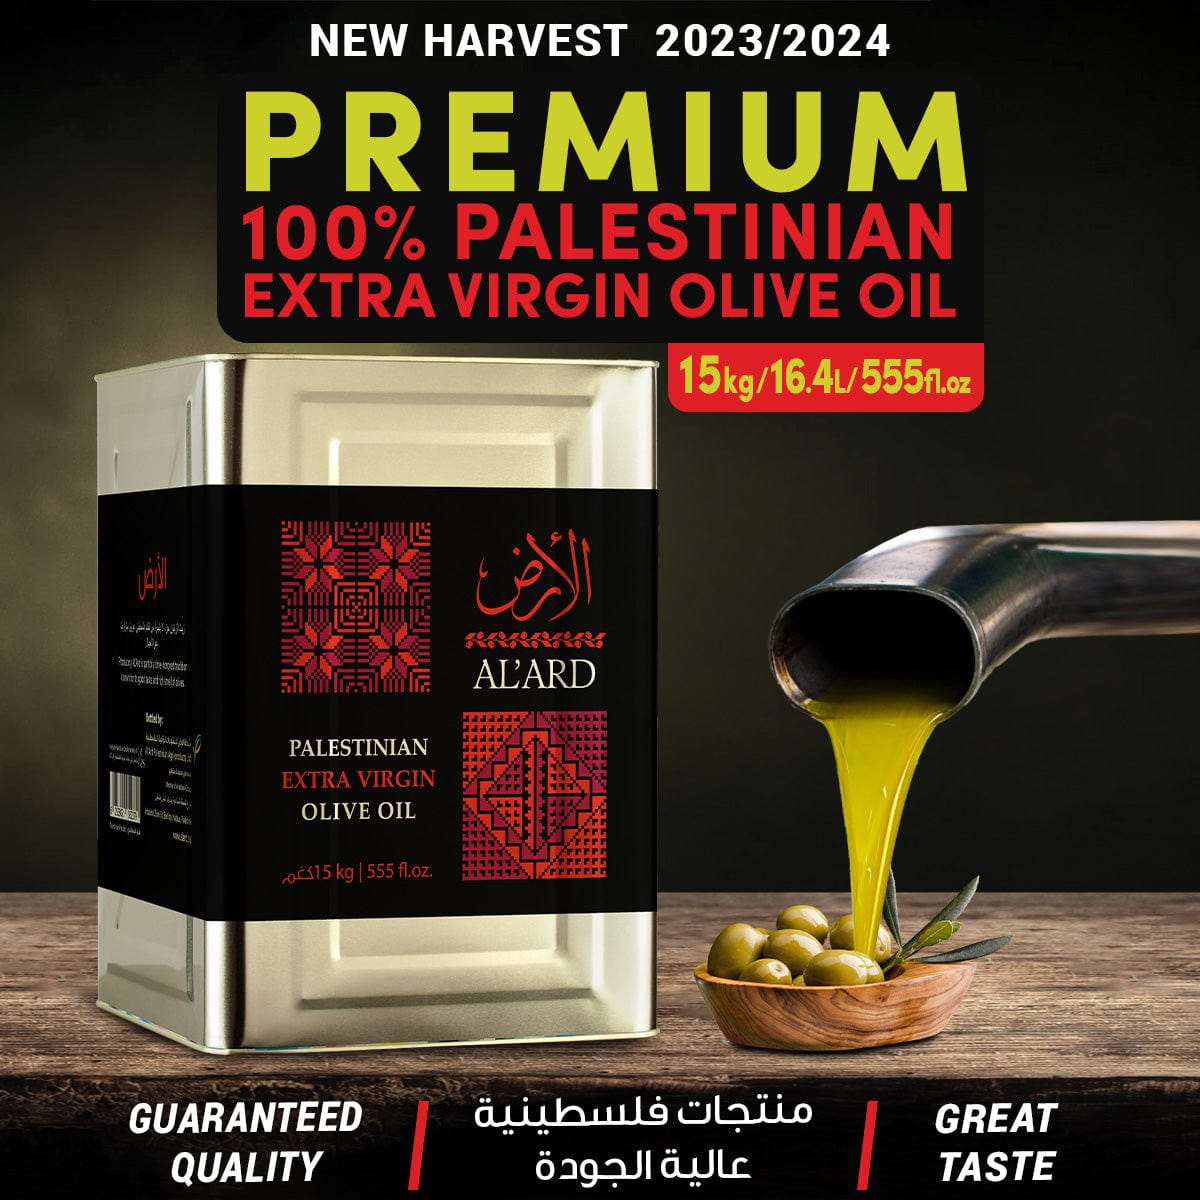 Al'ard USA 1 New Harvest 2023- Extra Virgin Palestinian Olive Oil - 16.4L (15kg) TIN